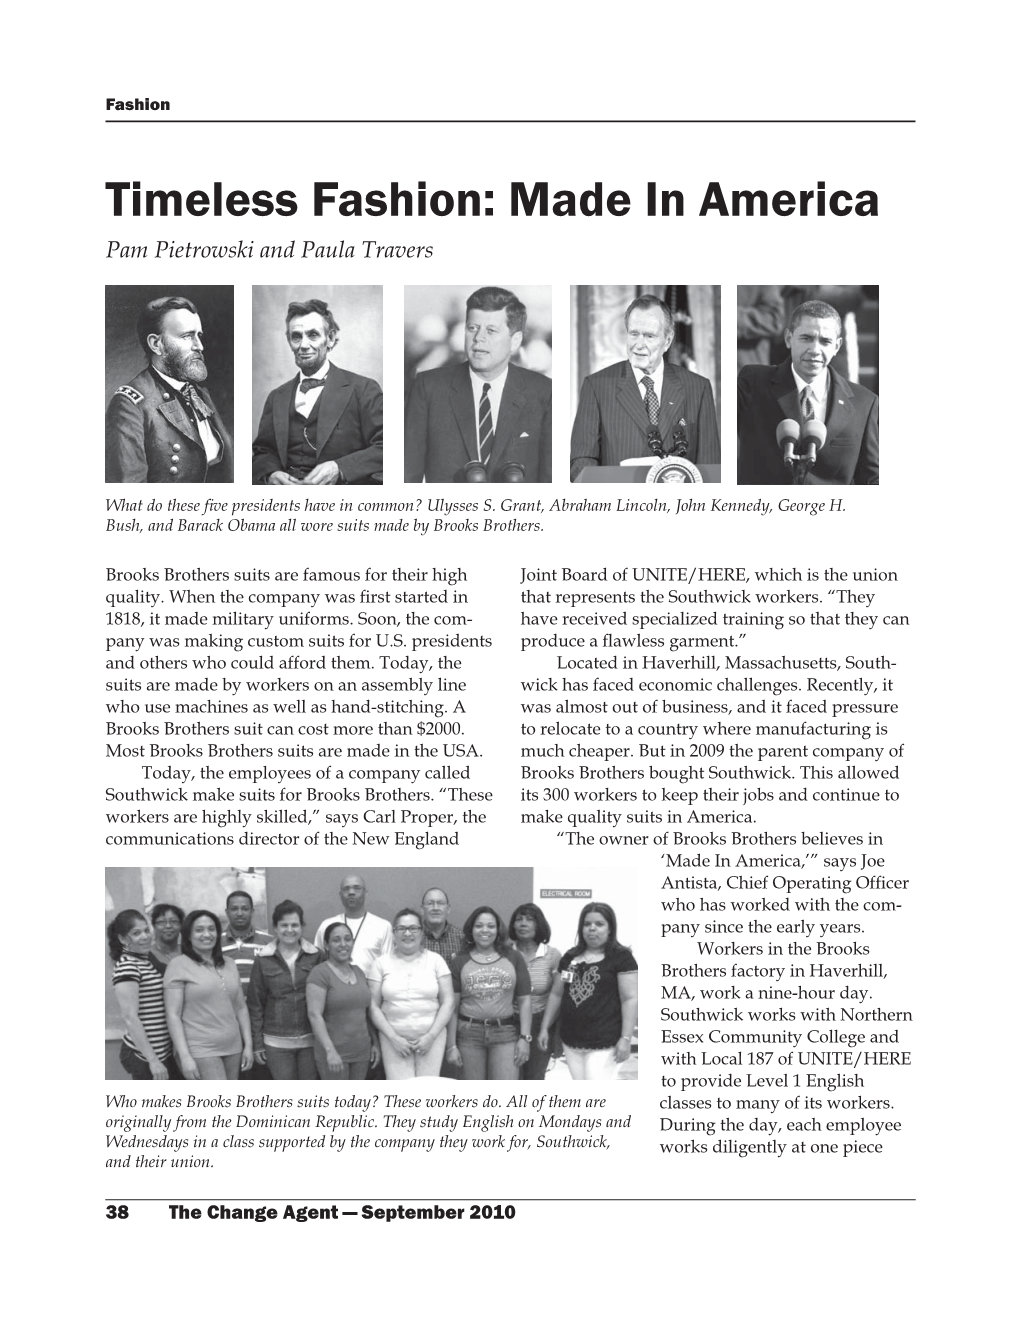 Timeless Fashion: Made in America Pam Pietrowski and Paula Travers